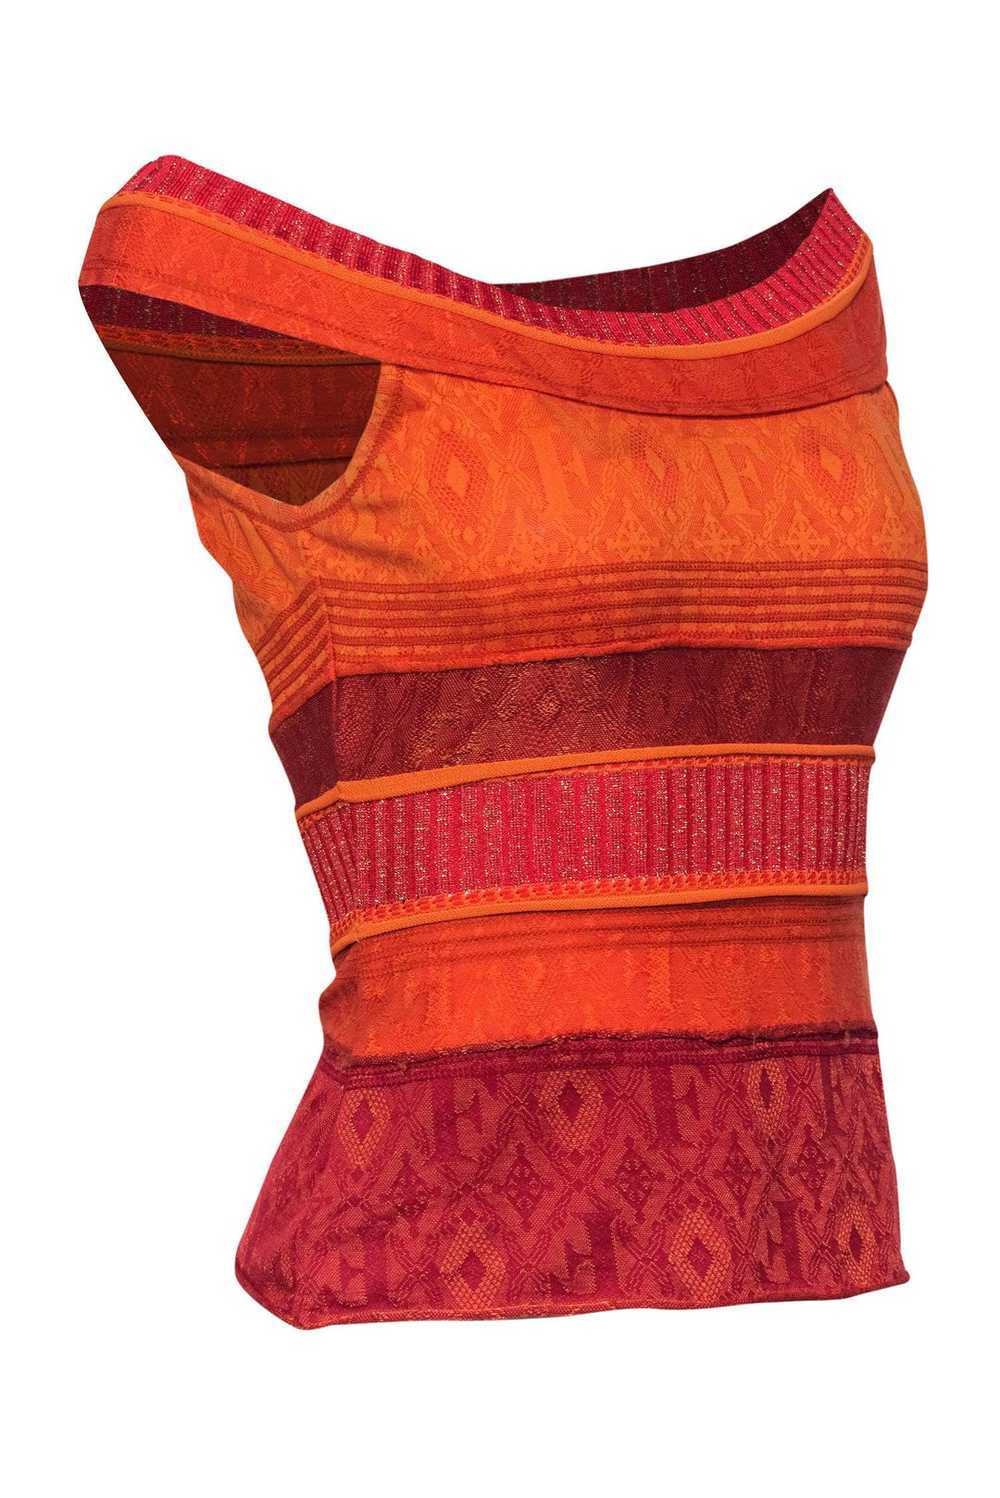 Gianfranco Ferre - Orange Metallic Textured Knit … - image 2